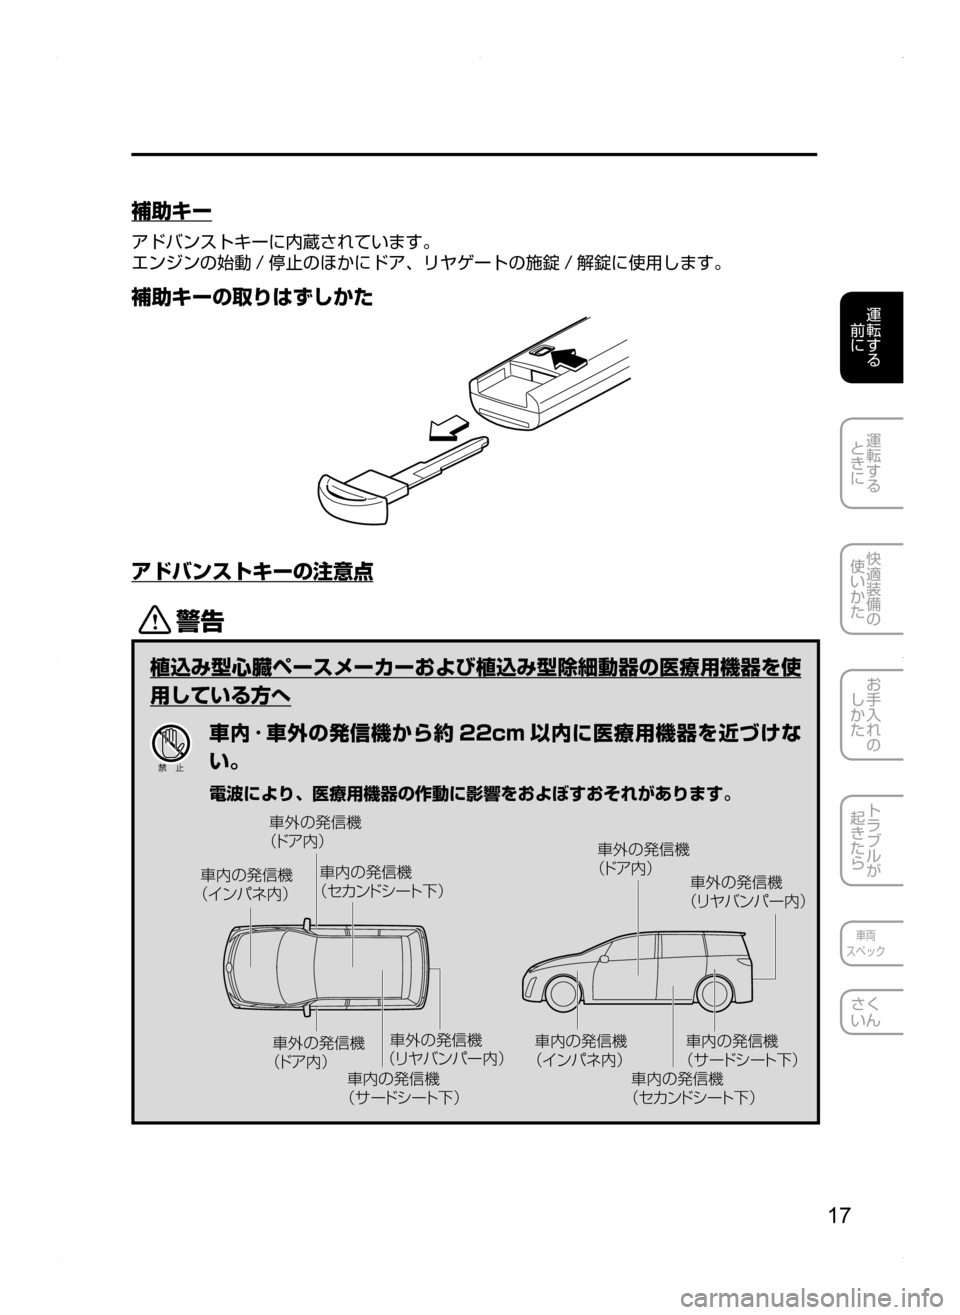 MAZDA MODEL BIANTE 2008  取扱説明書 (in Japanese) 17
運転する
前に
運転する
ときに
快適装備の
使いかた
お手入れの
しかた
トラブルが
起きたら
車両
スペック
さく
いん
補助キー
アドバンストキ�